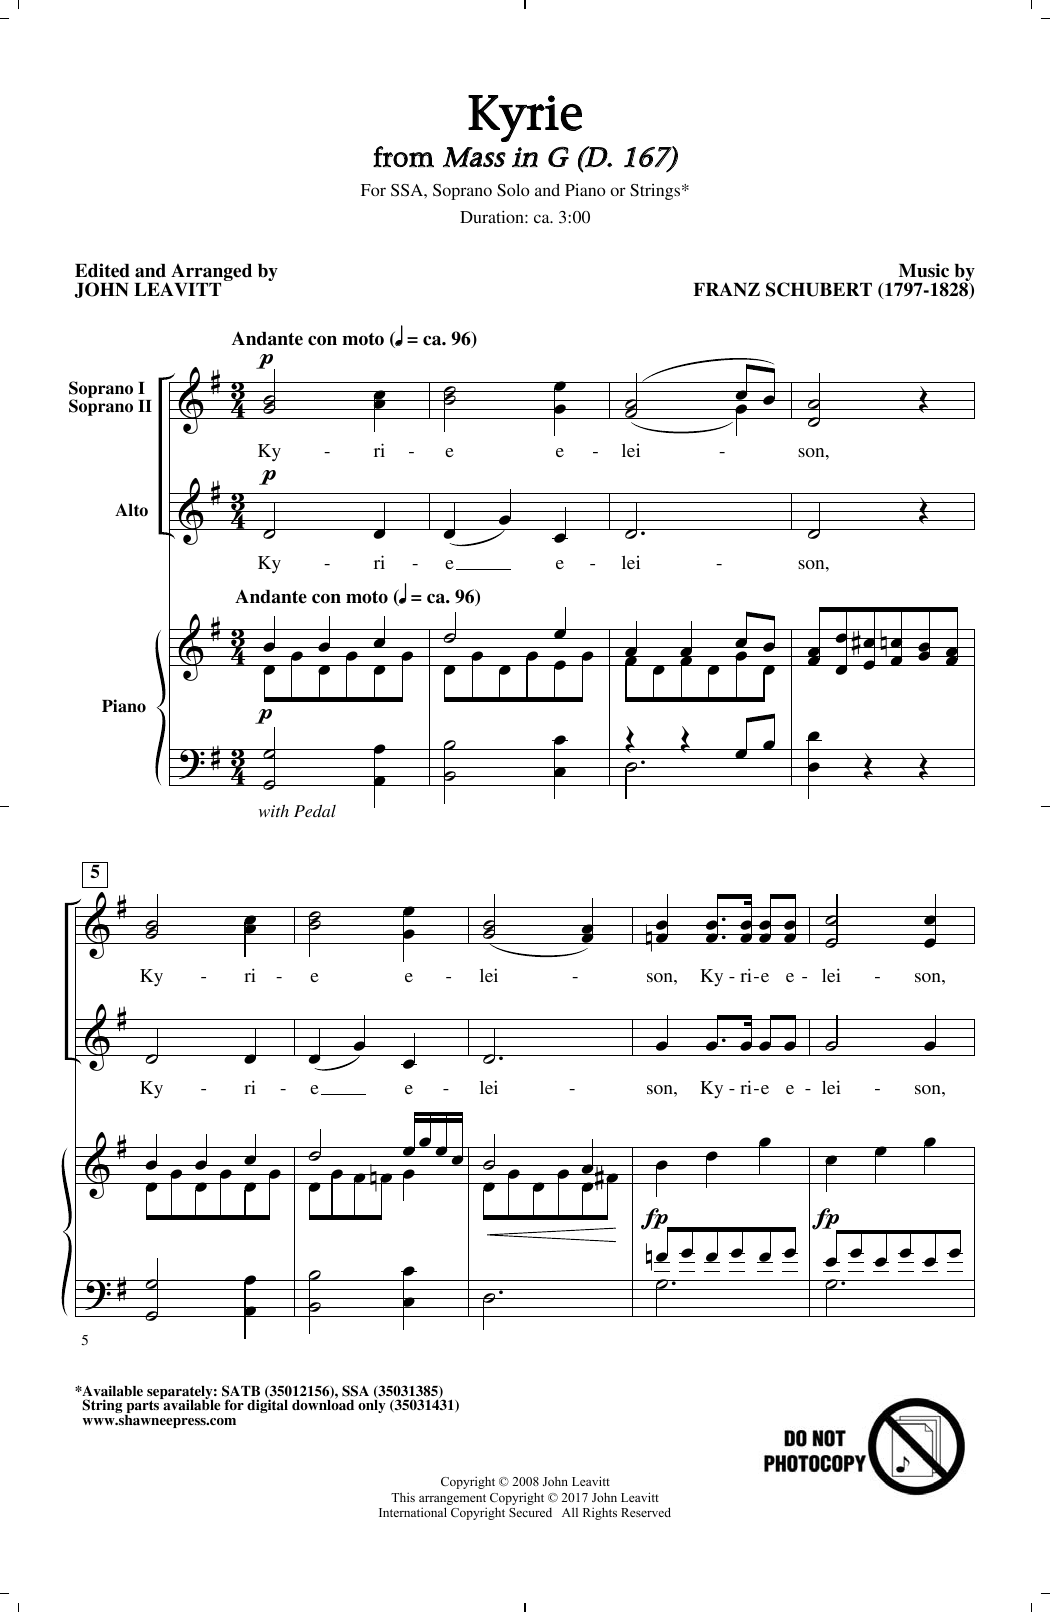 John Leavitt Kyrie Sheet Music Notes & Chords for SSA - Download or Print PDF